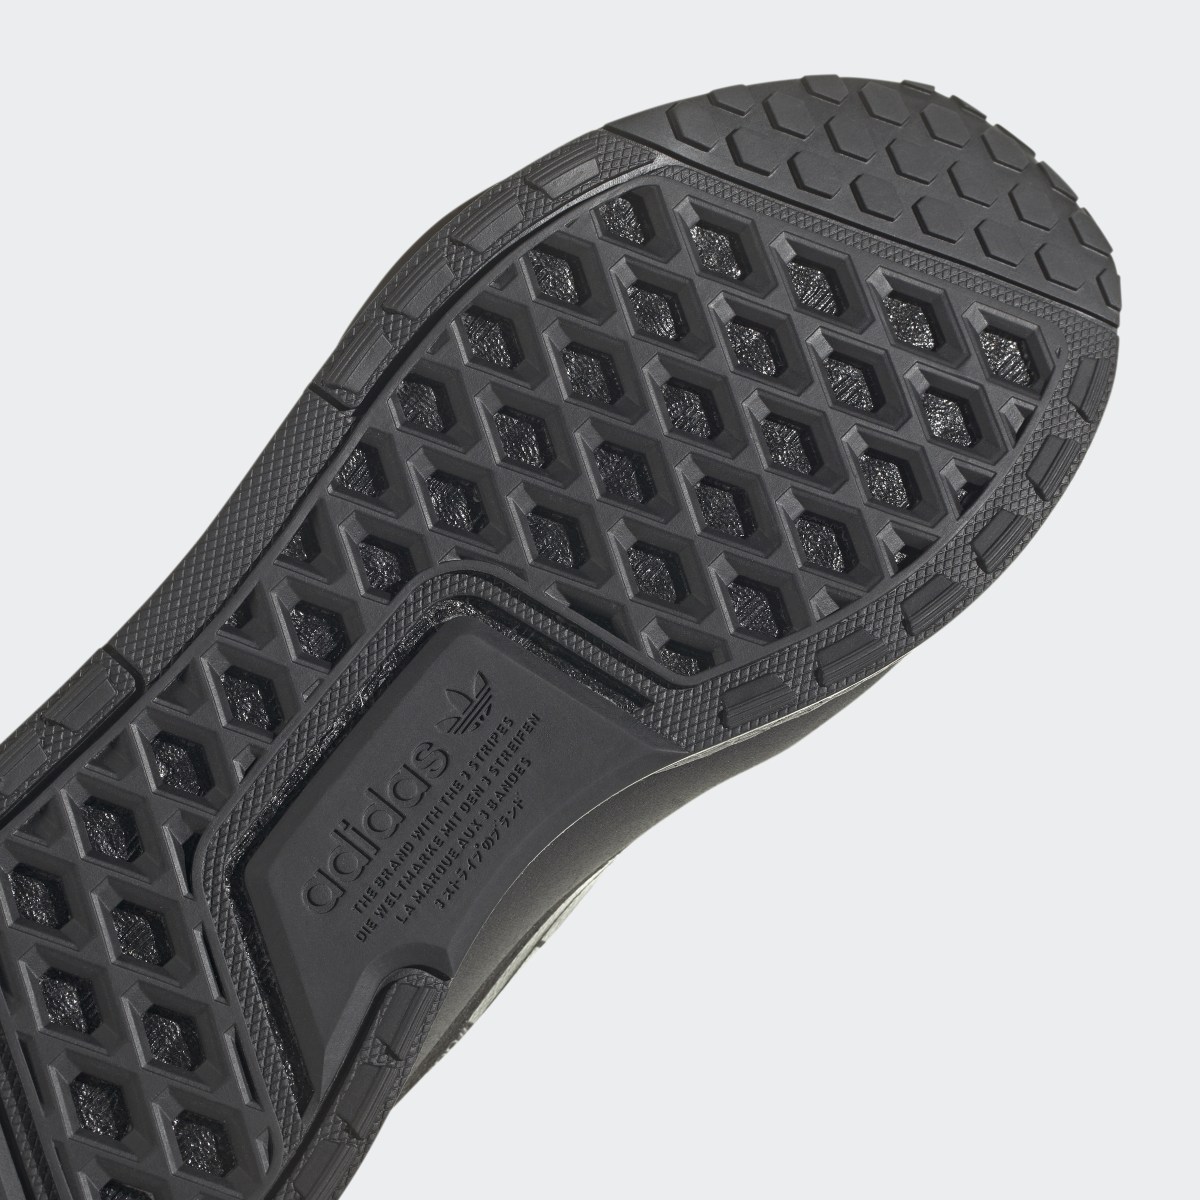 Adidas Chaussure NMD_V3. 10